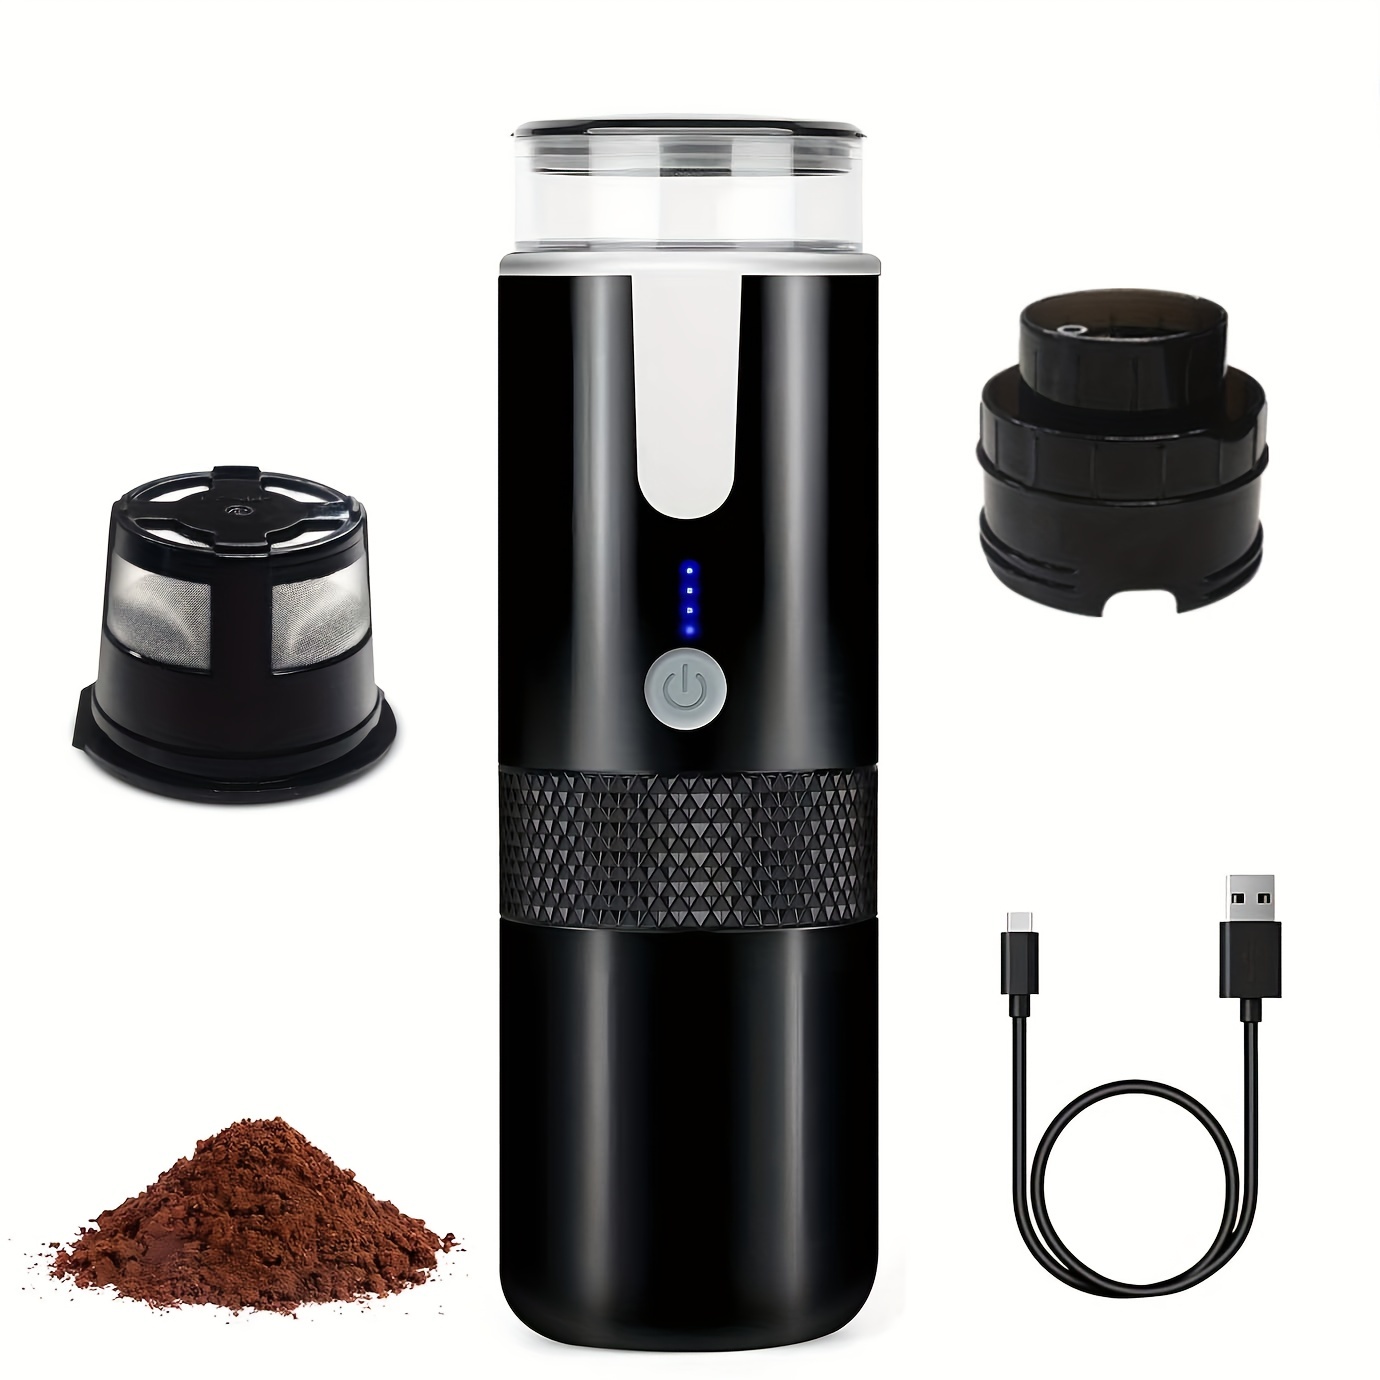 HiBREW Wireless Portable Espresso Coffee Machine for Car and Home Camping Travel  Coffee Maker made Nespresso